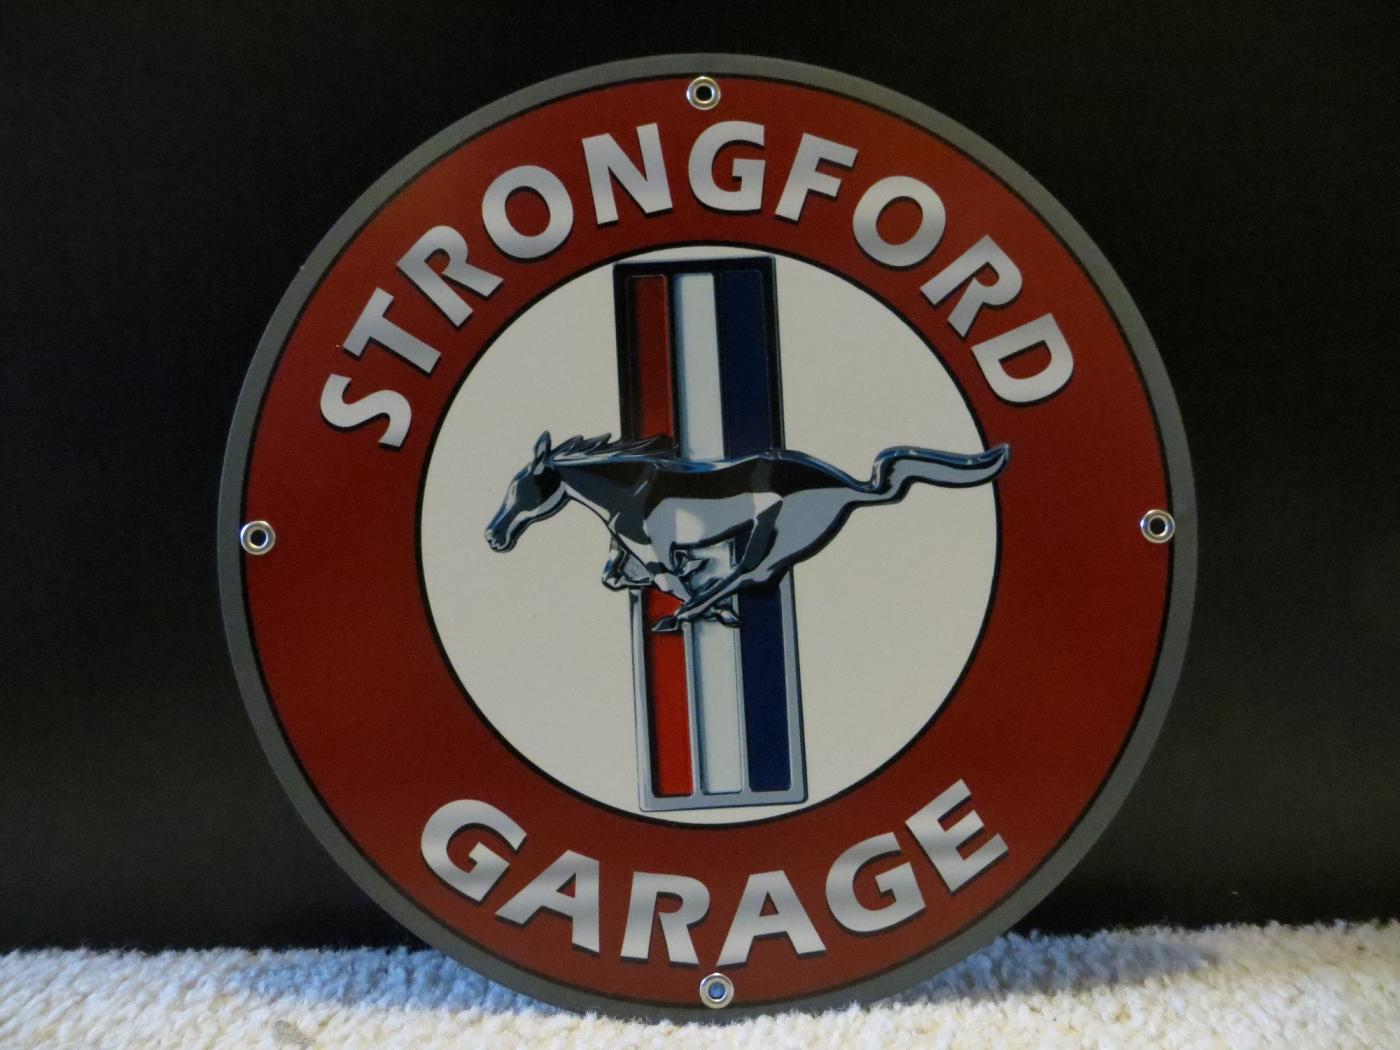 StongFord Garage.jpg